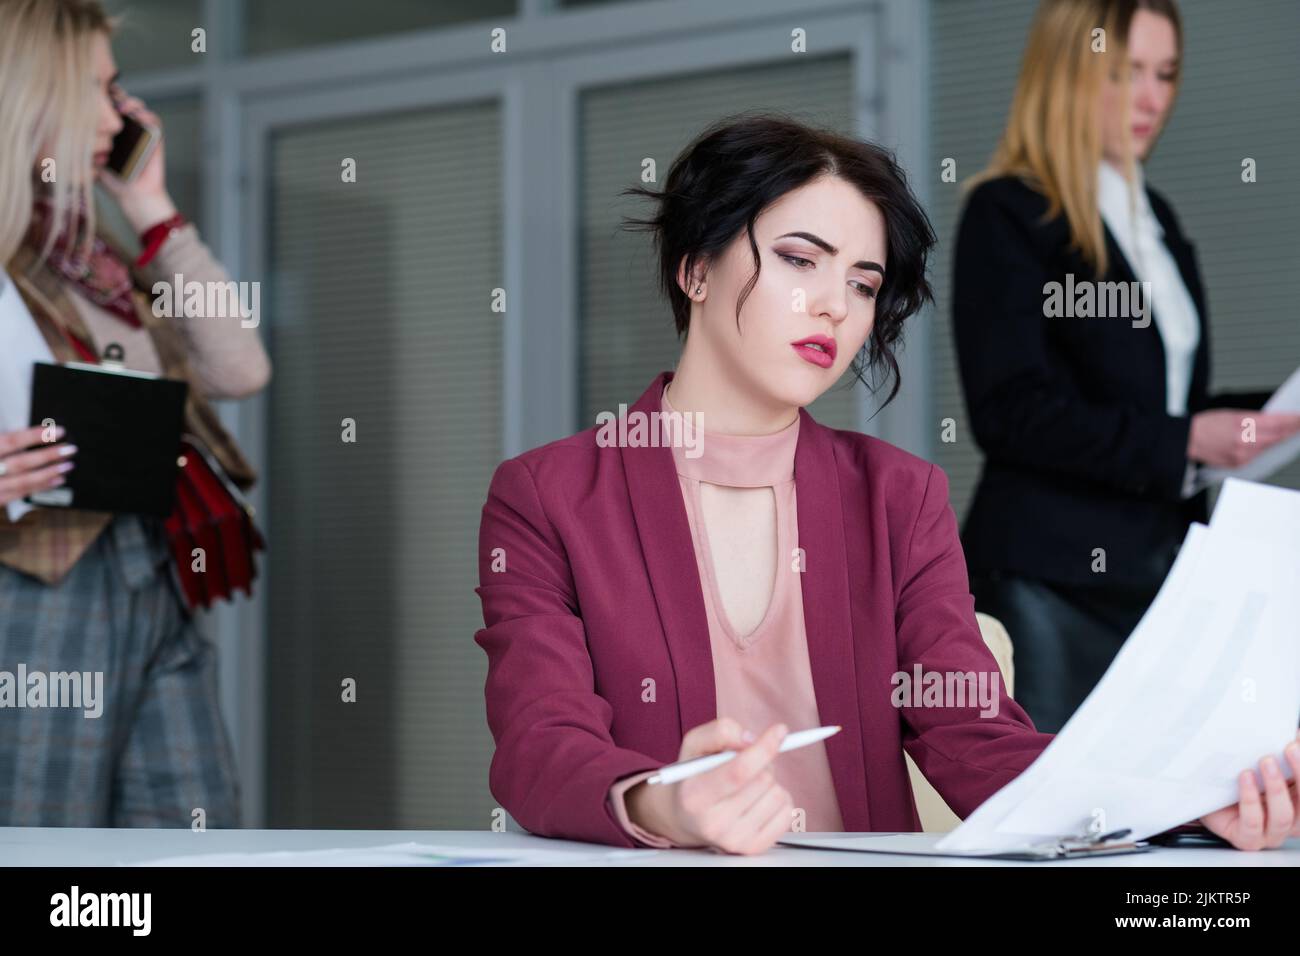 office rush sad pensive business woman thinking Stock Photo